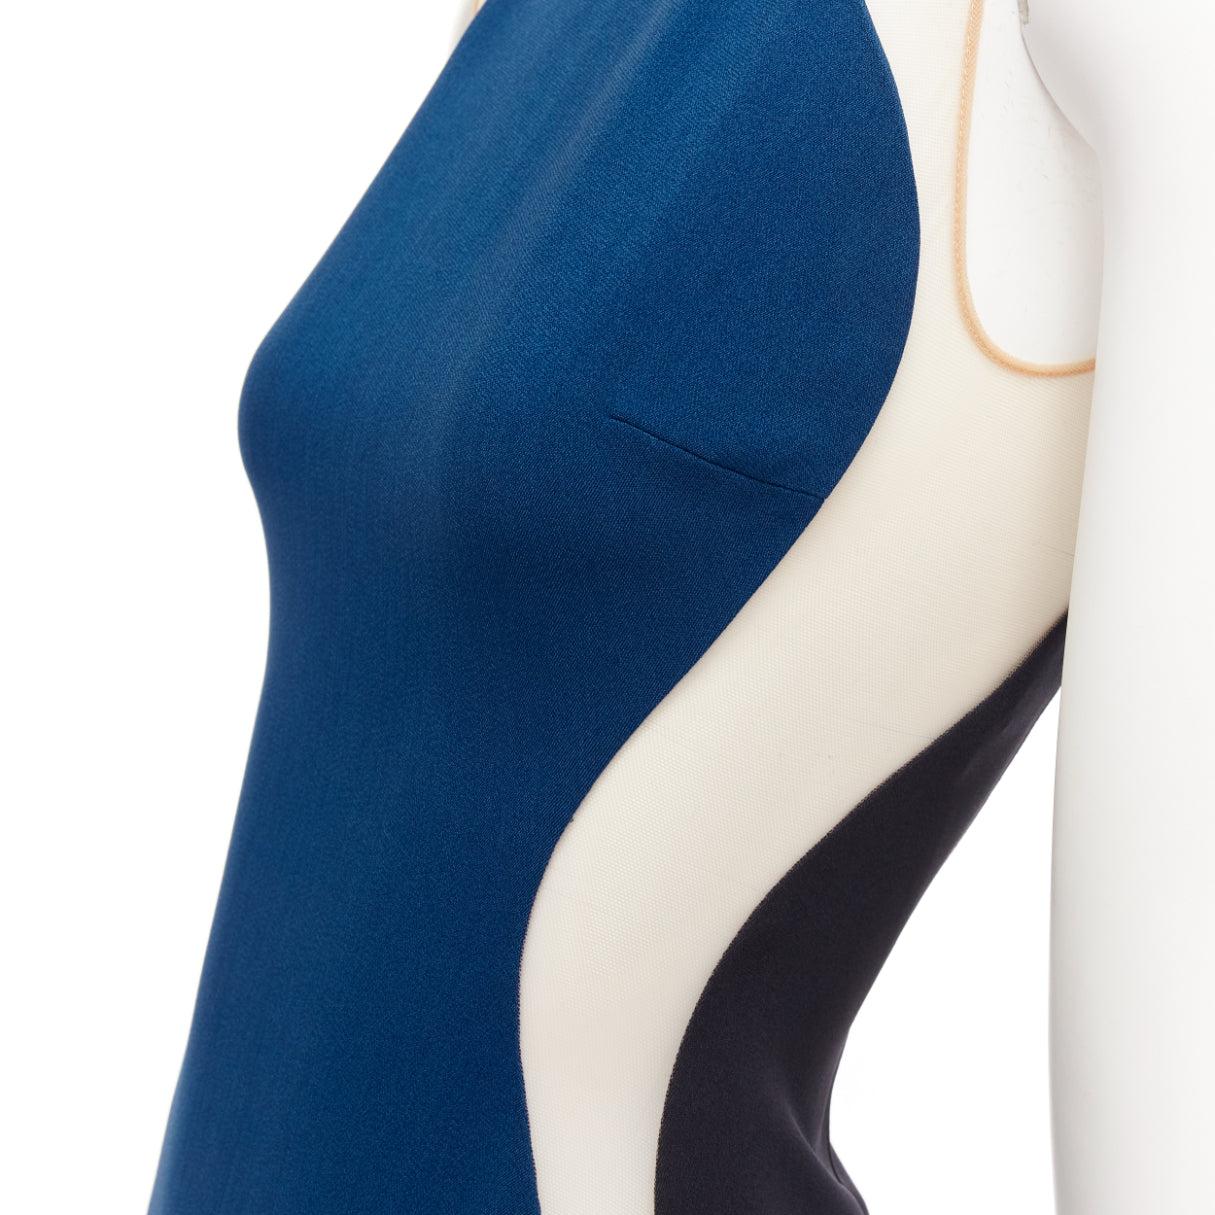 STELLA MCCARTNEY 2016 blue sheer panel waist illusion mini dress IT36 XXS
Reference: EALU/A00020
Brand: Stella McCartney
Designer: Stella McCartney
Collection: 2016
Material: Viscose, Blend
Color: Blue, Navy
Pattern: Solid
Closure: Zip
Lining: Blue